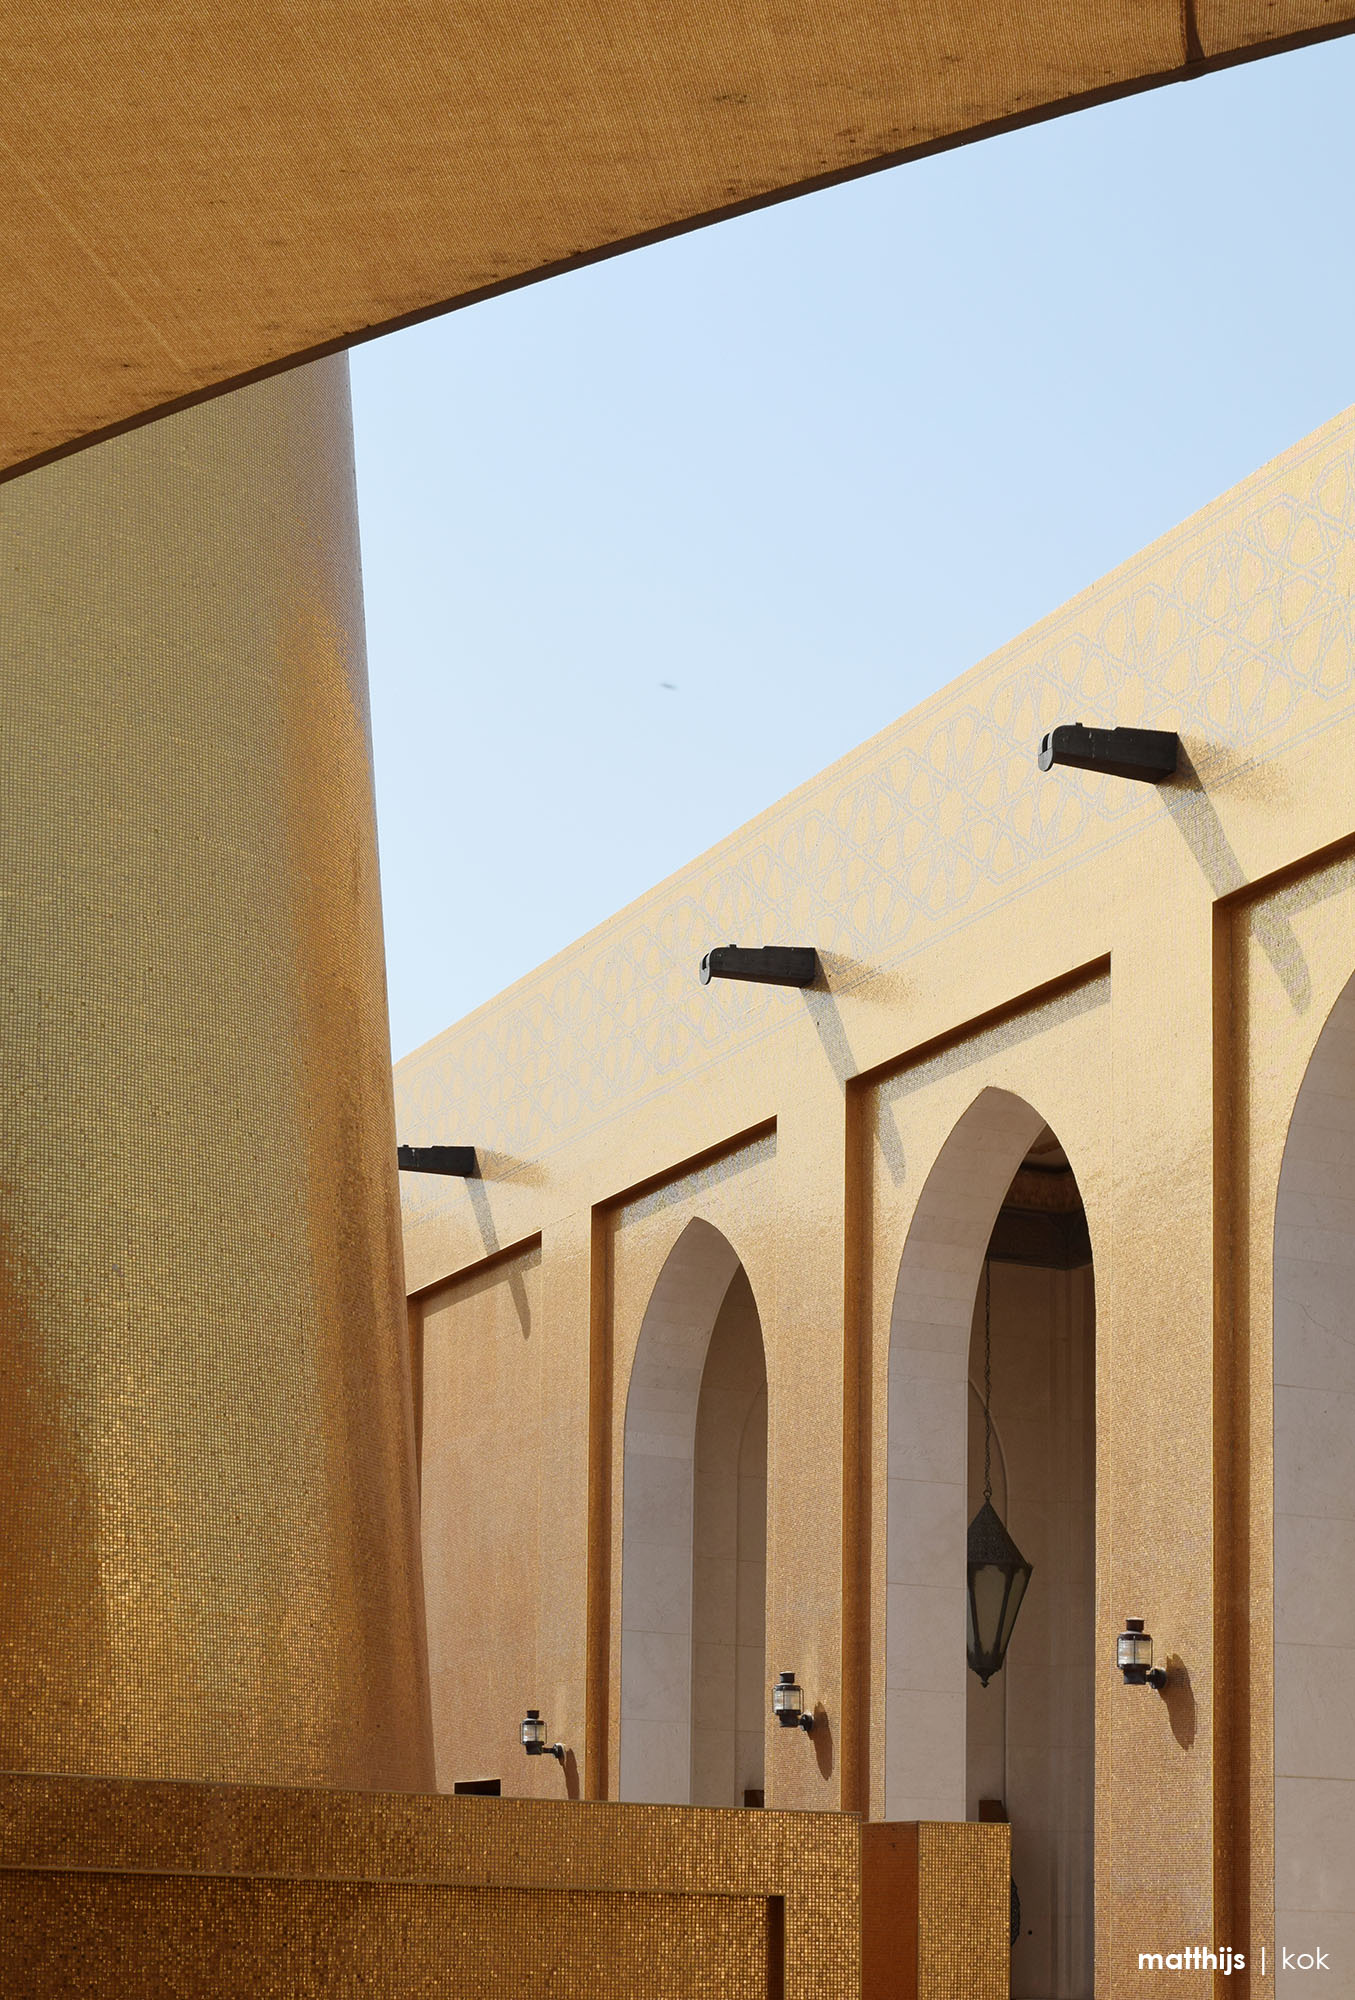 Katara Cultural Village, Doha, Qatar | Photo by Matthijs Kok